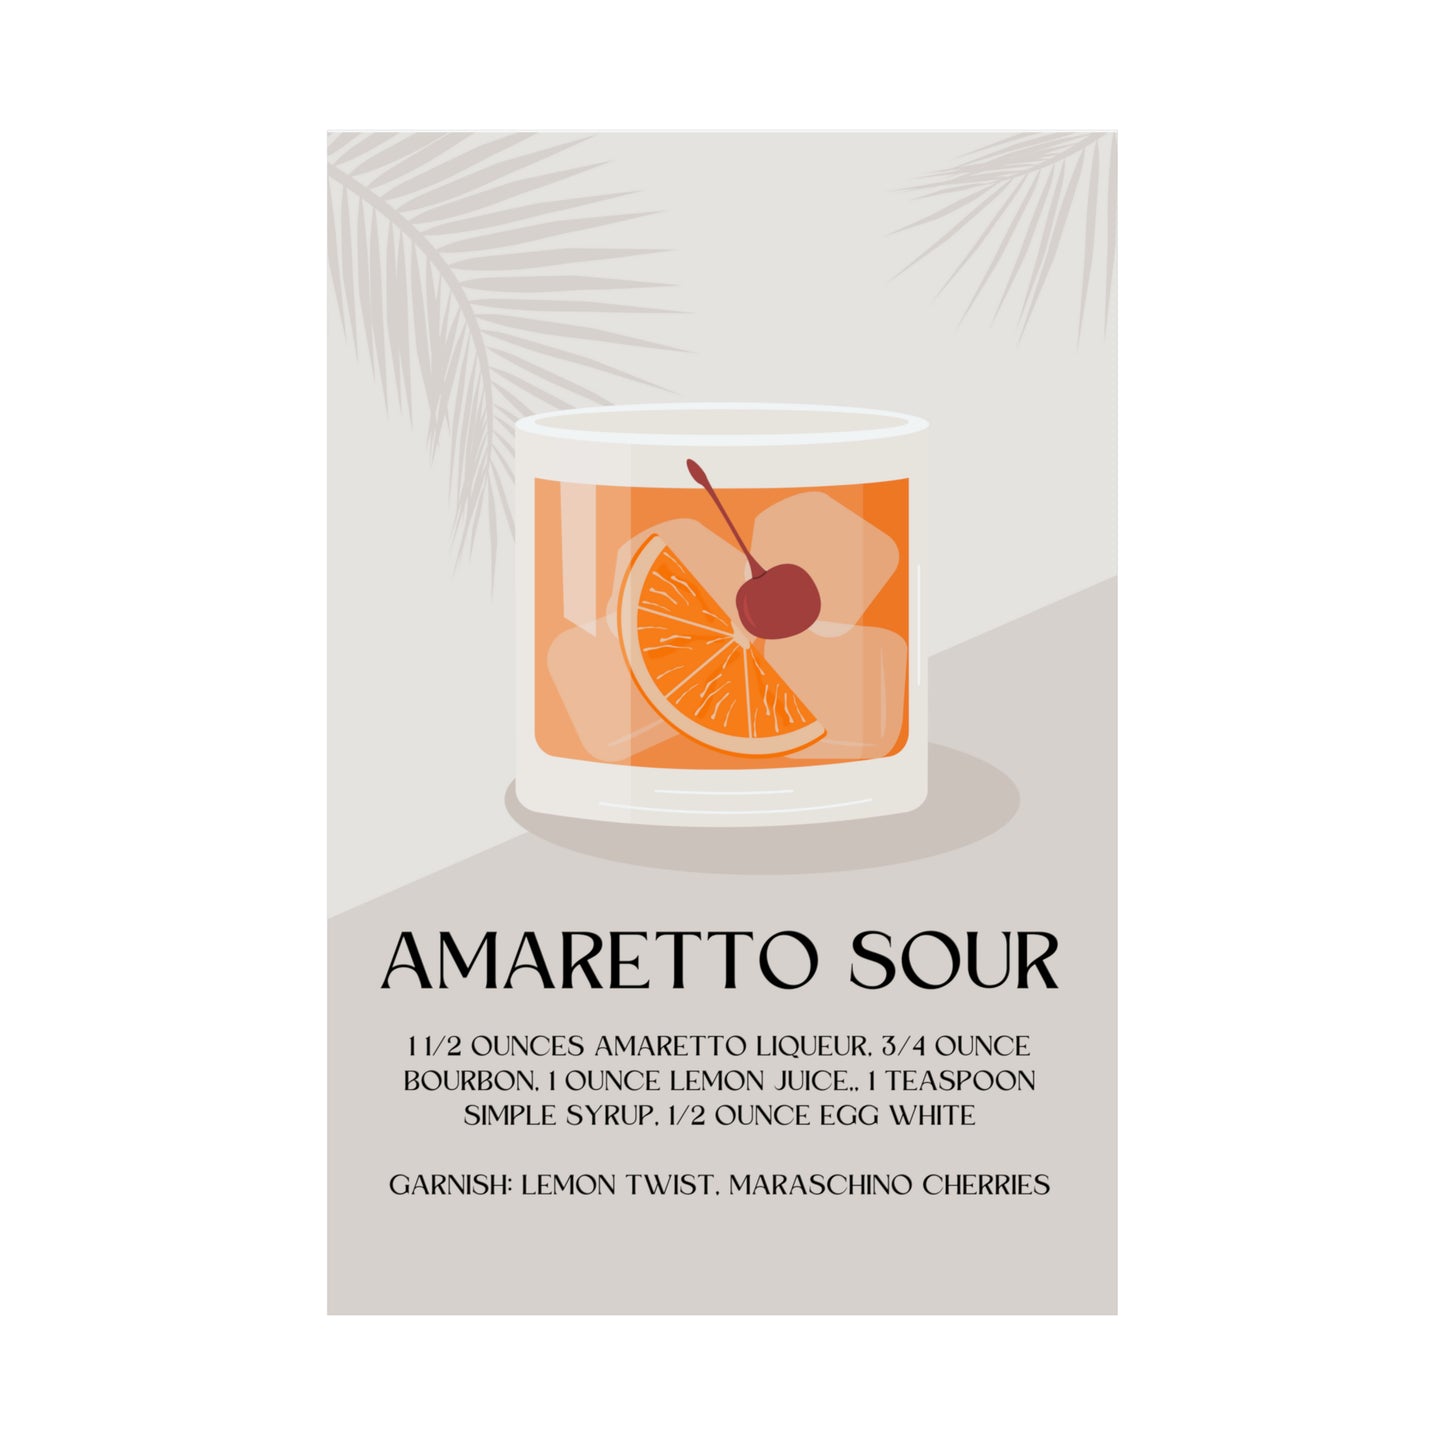 Amaretto Sour Cocktail Print - Multiple Sizes Available